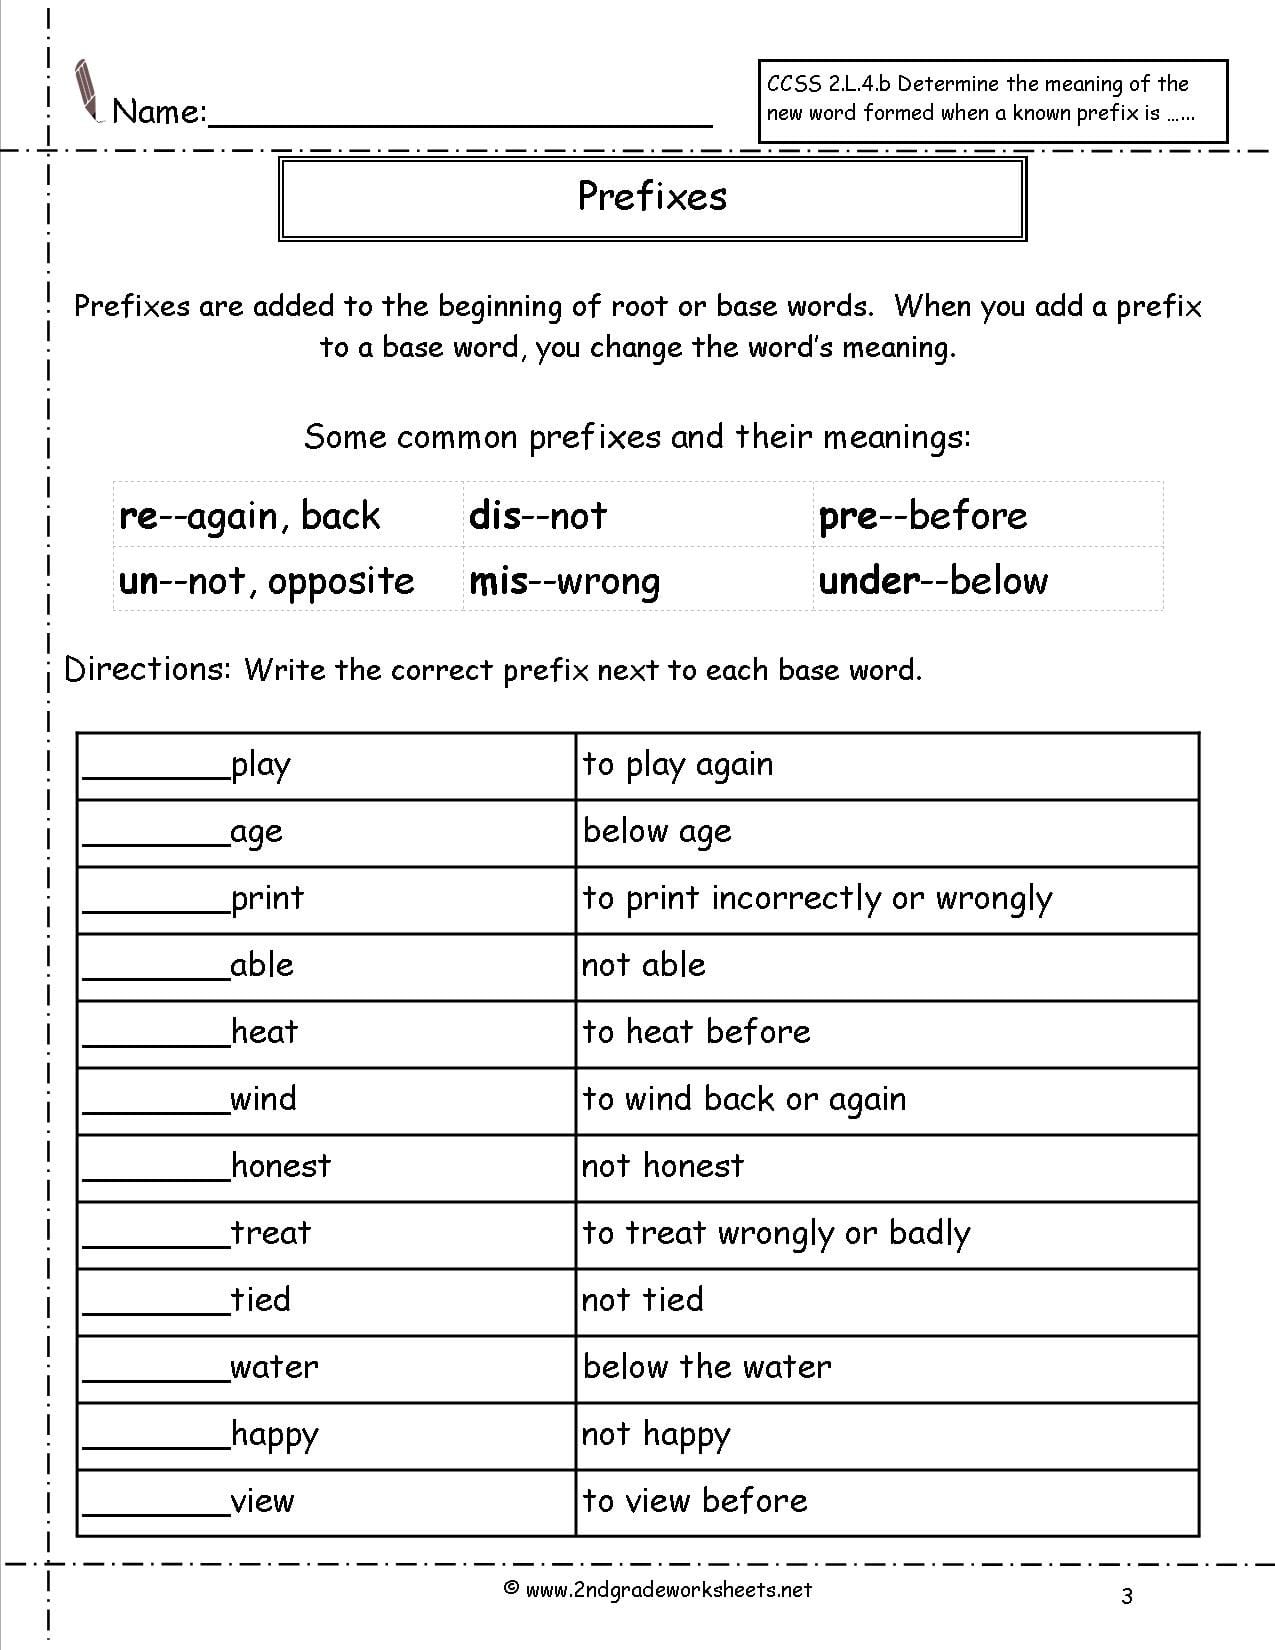 Free Printable Prefix Worksheets For Third Grade